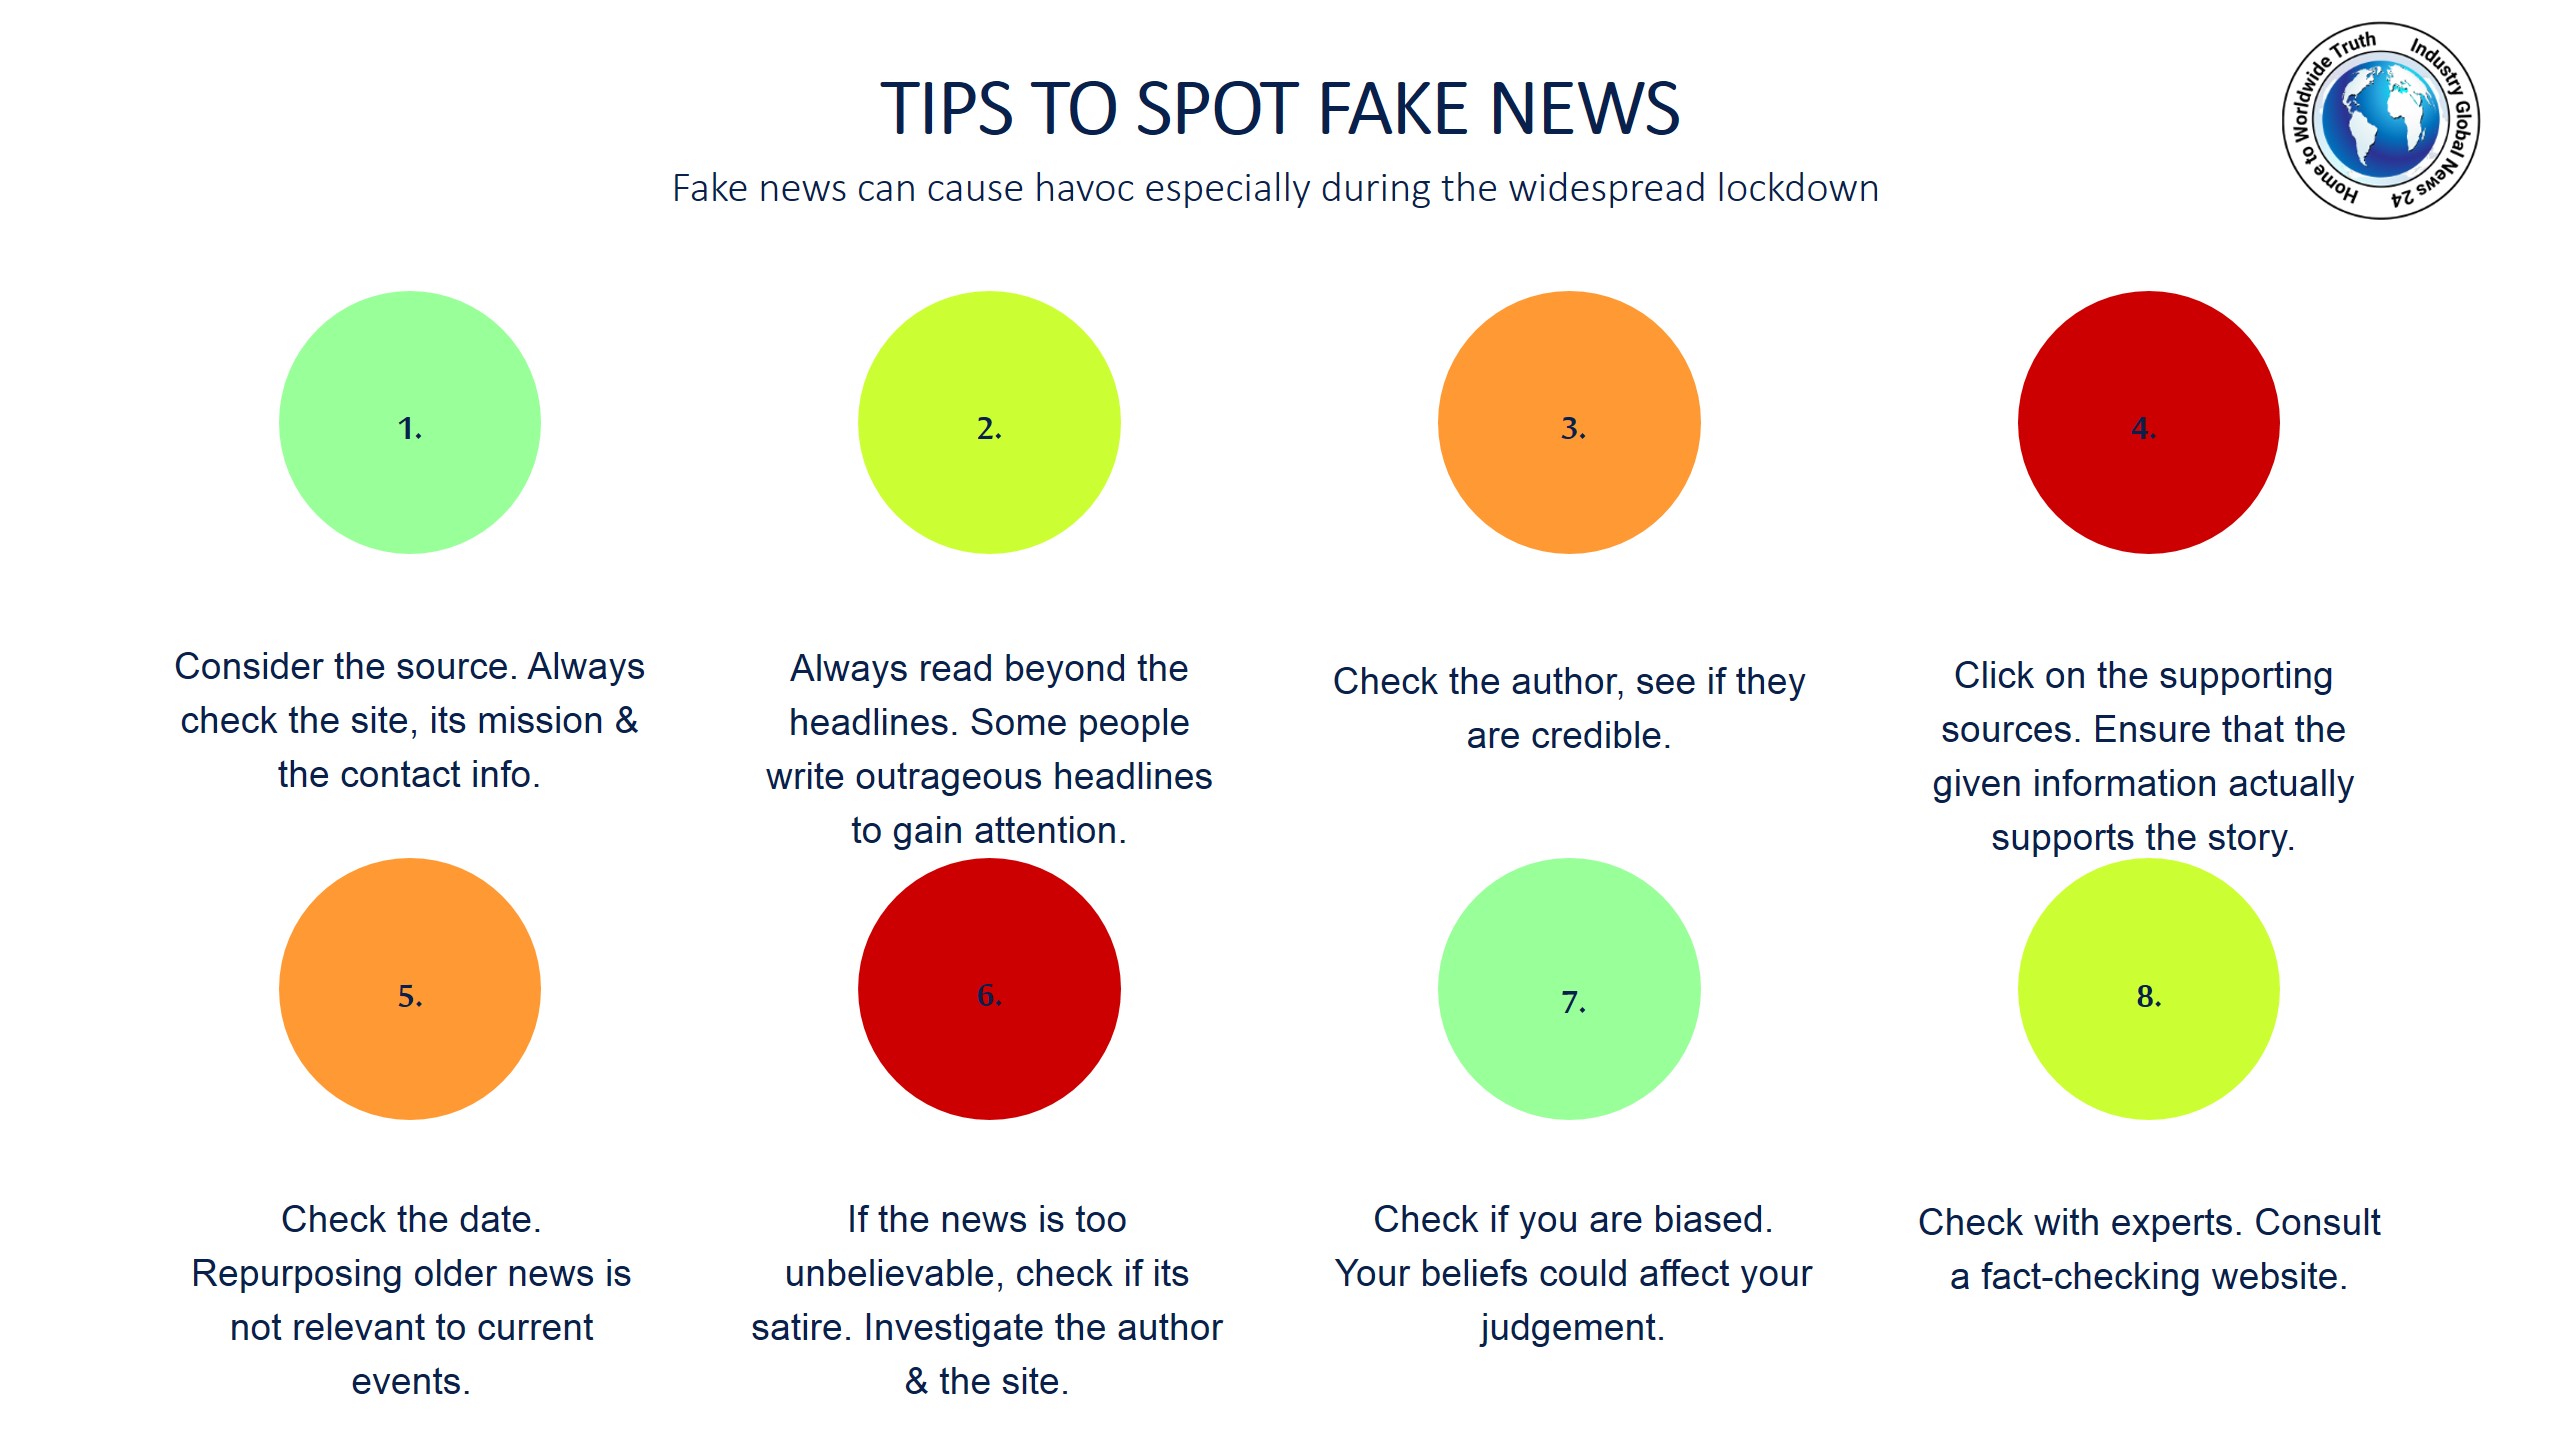 Tips to spot fake news